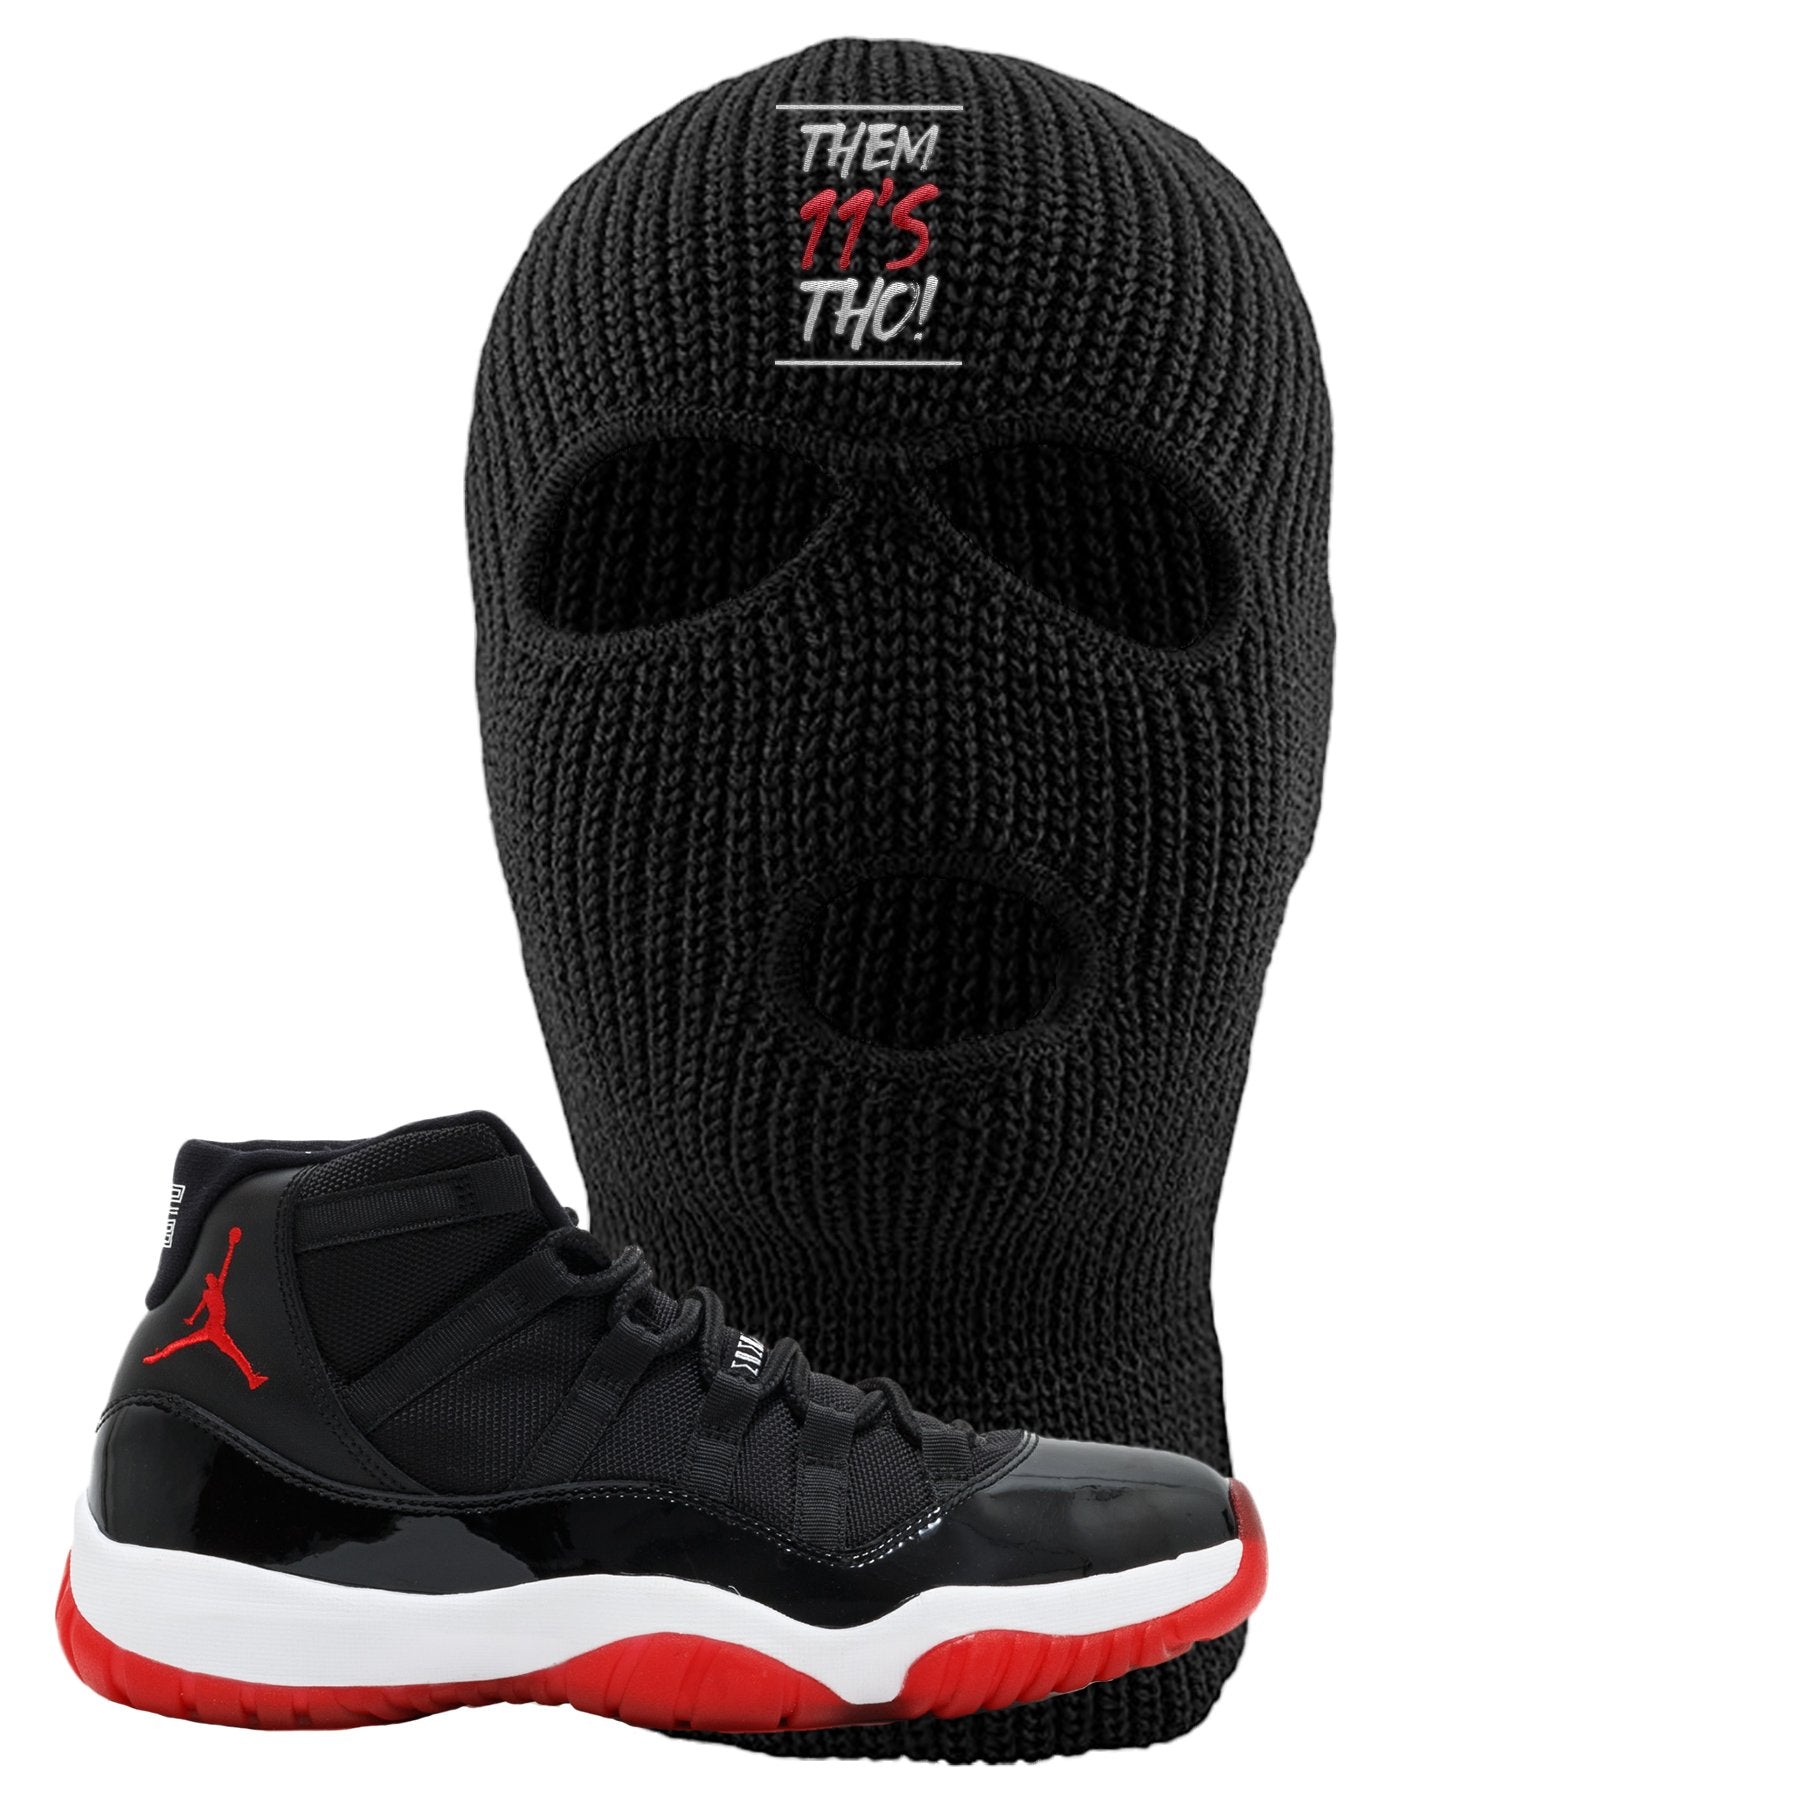 Jordan 11 Bred Them 11s Tho Black Sneaker Hook Up Ski Mask